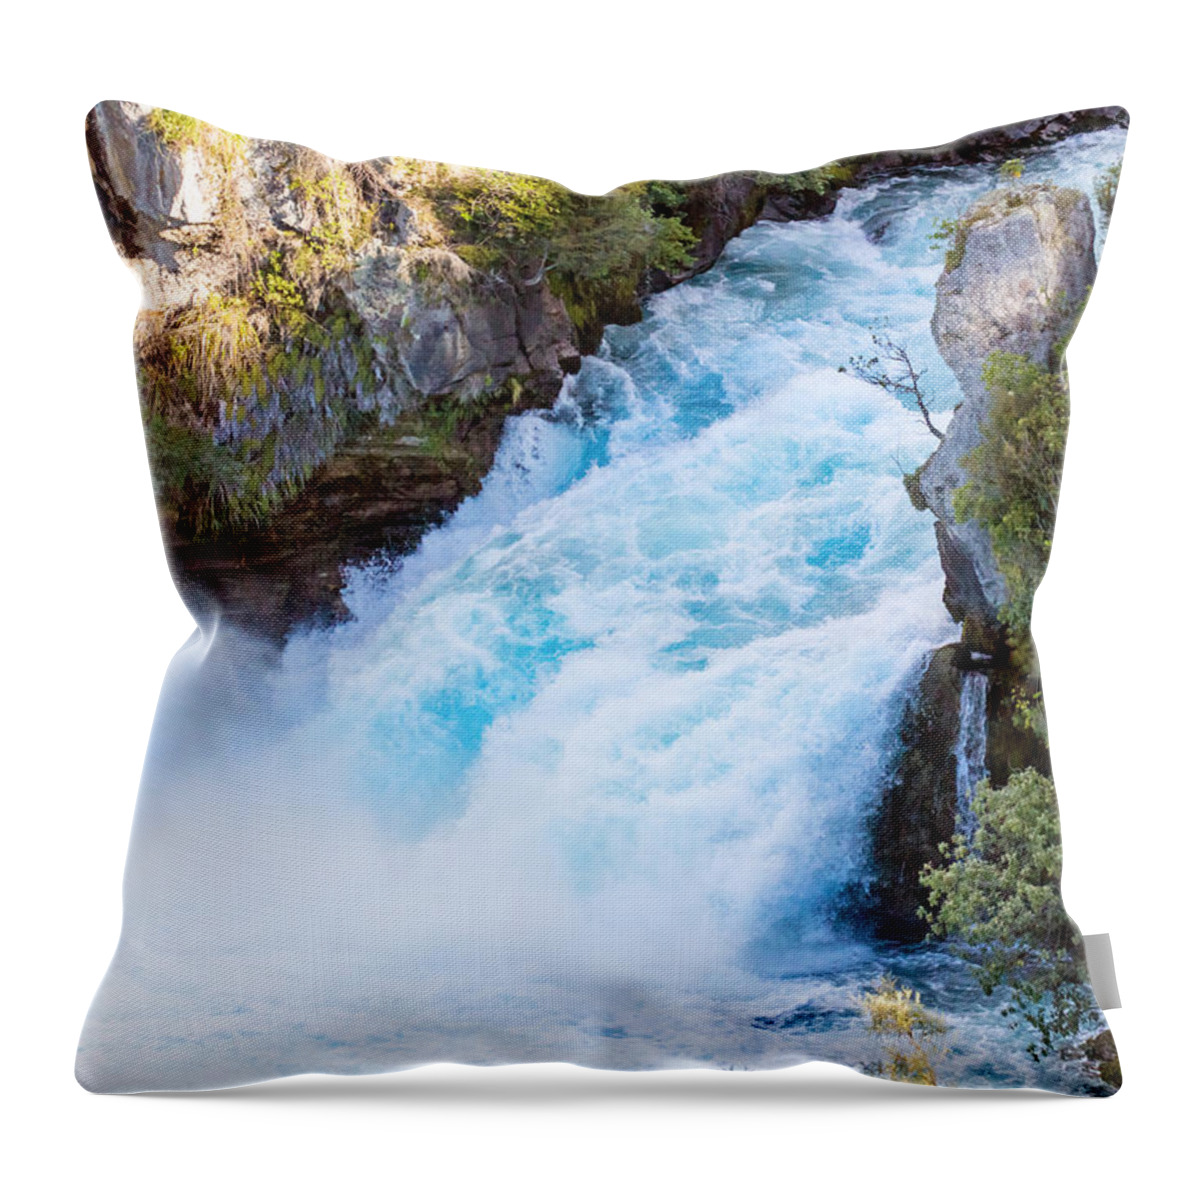 Huka Throw Pillow featuring the photograph Huka Falls by Nicholas Blackwell